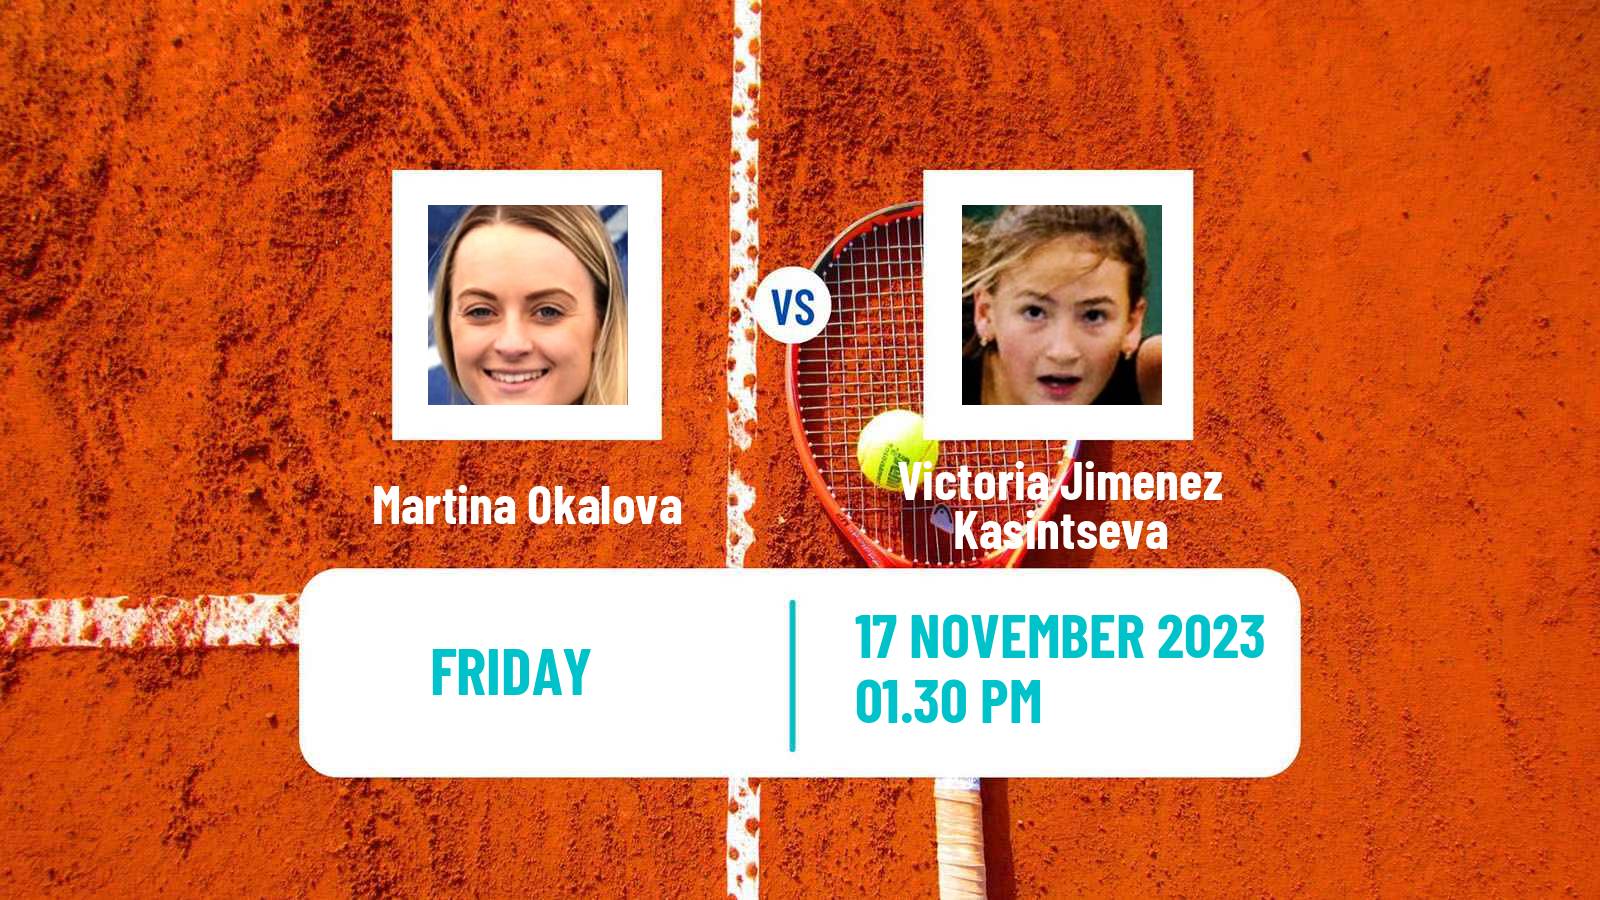 Tennis ITF W25 Austin Tx Women Martina Okalova - Victoria Jimenez Kasintseva